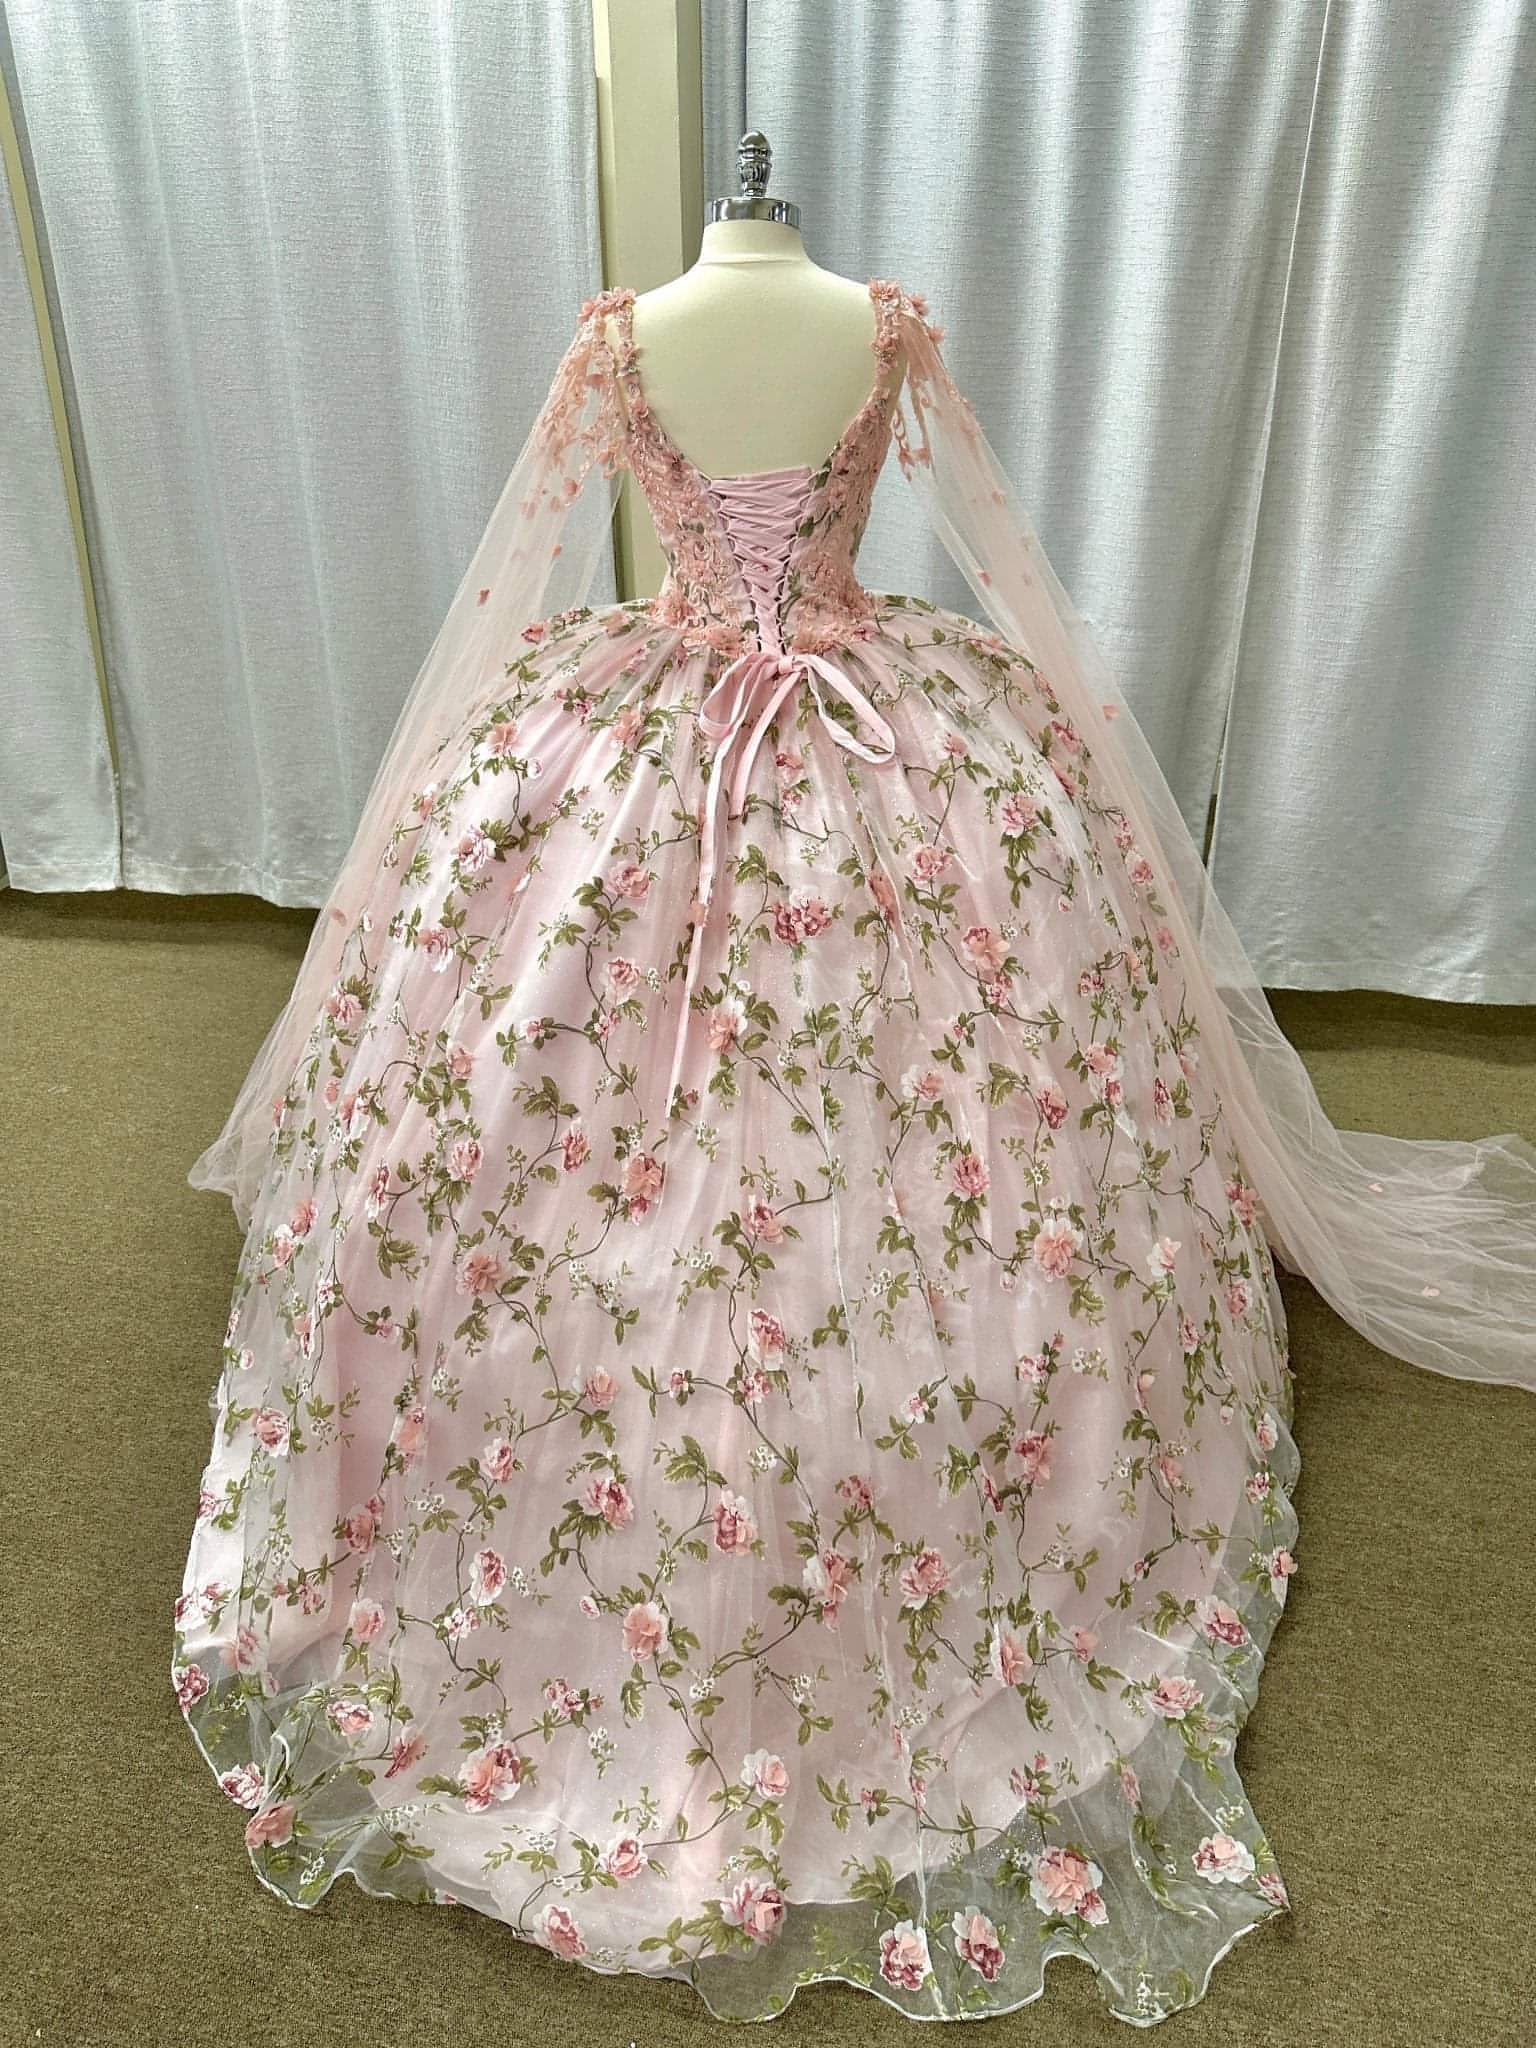 Dancing Queen 1715 - Sweetheart Floral Printed Ballgown - Mis Quince PrimaverasBlanquis Bridal